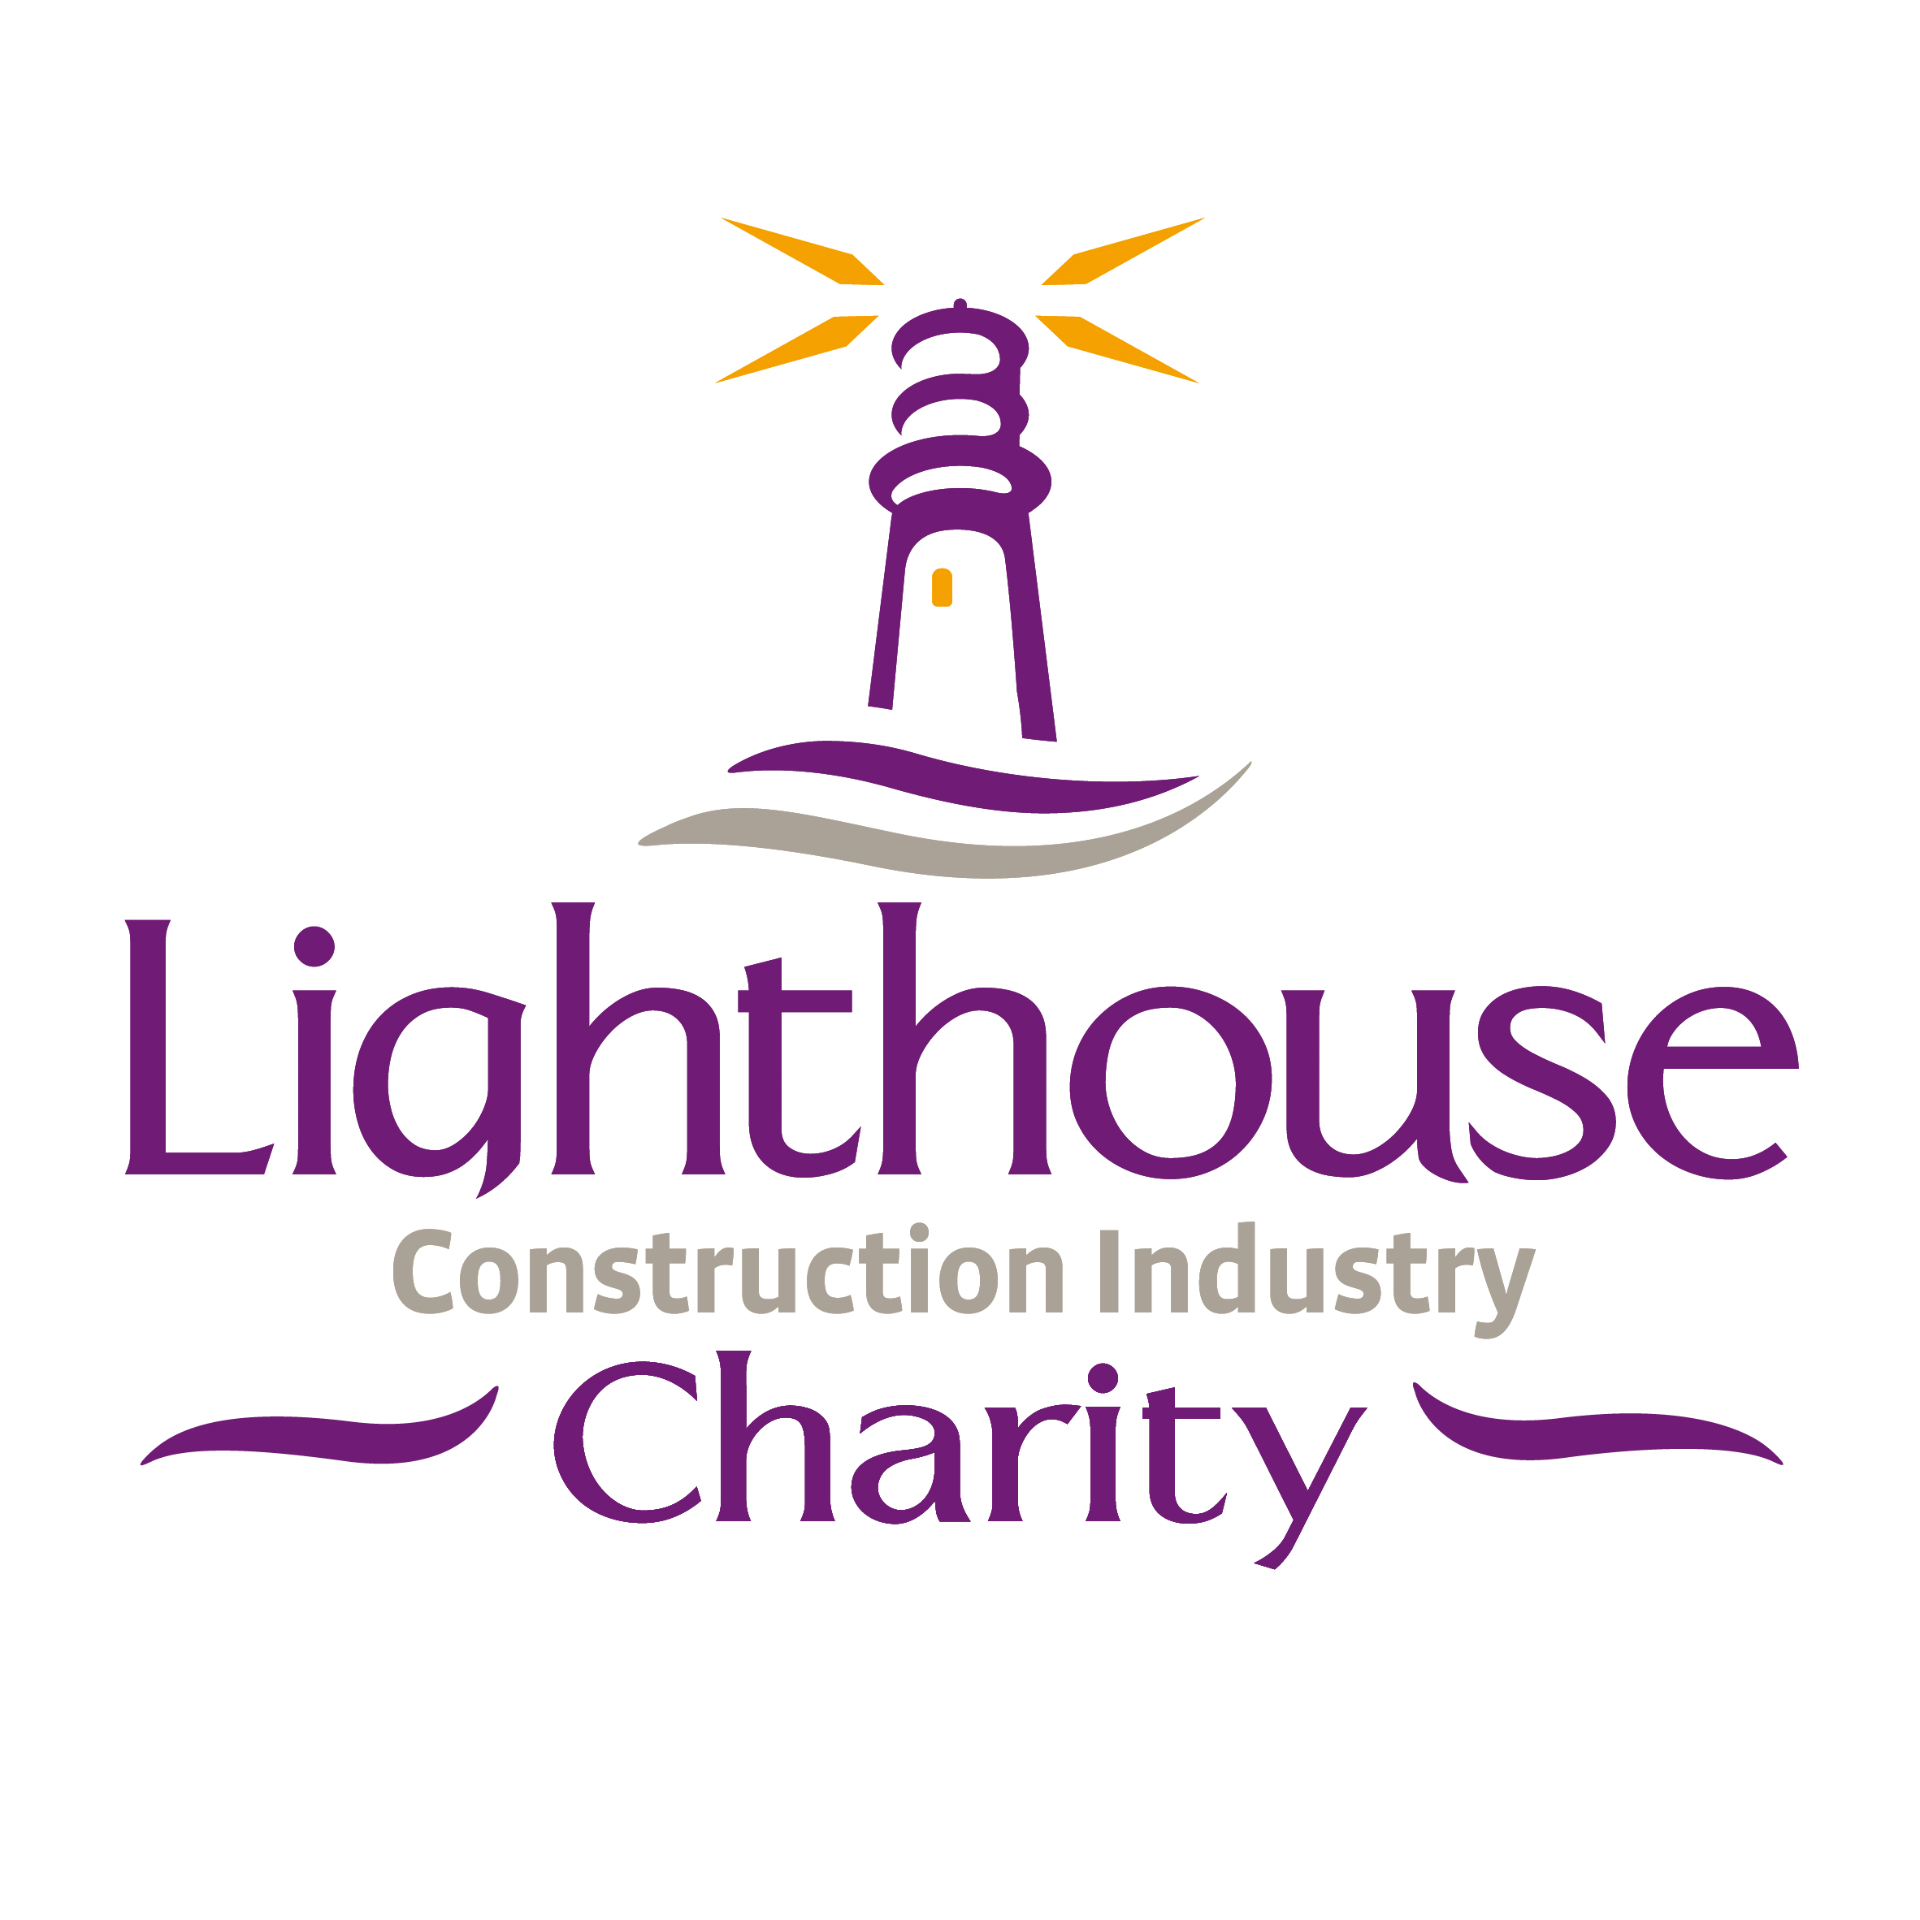 Lighthouse Club Ireland